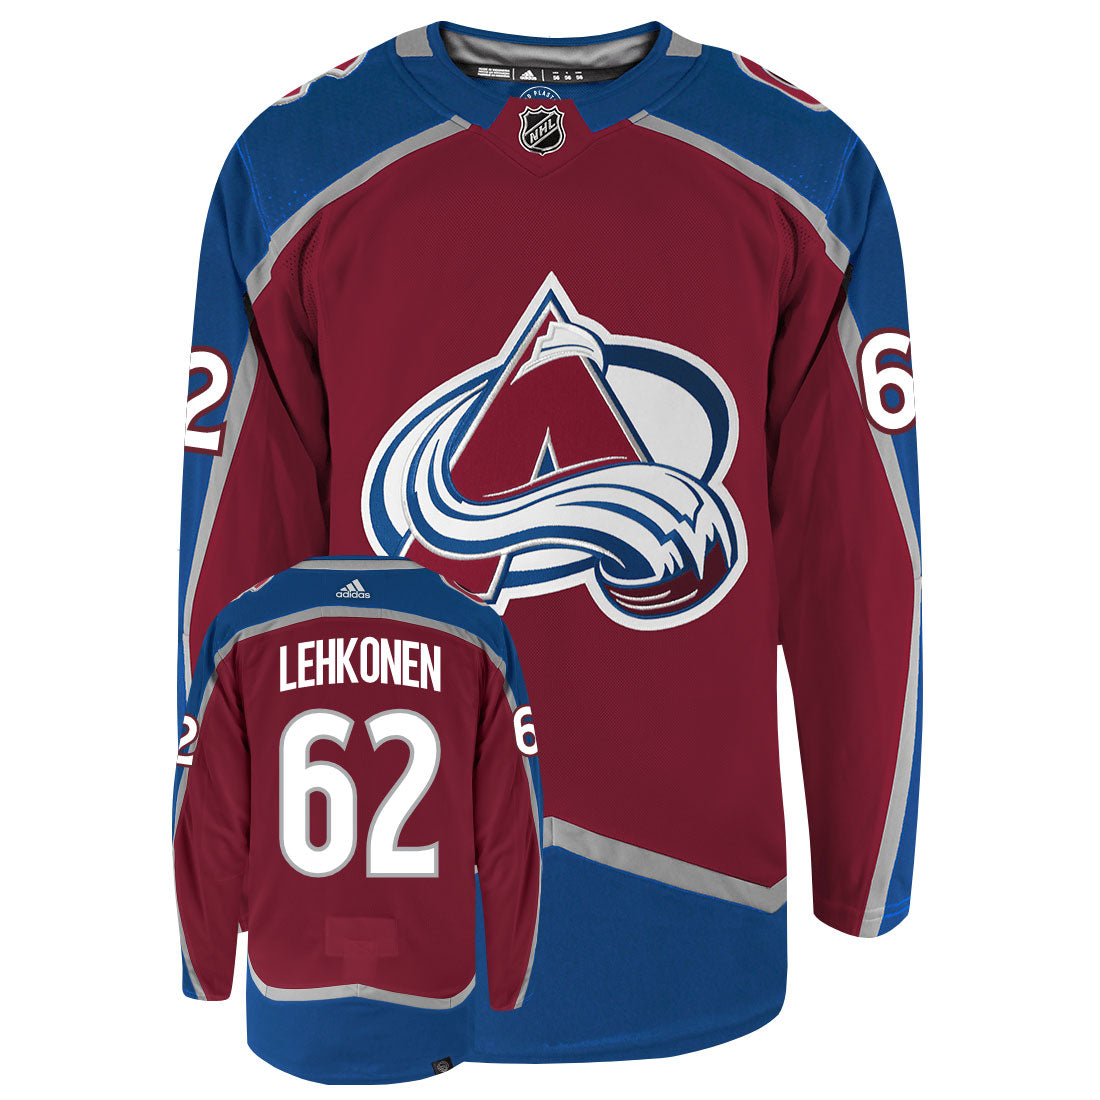 Arturri Lehkonen Colorado Avalanche Adidas Primegreen Authentic Home NHL Hockey Jersey - Front/Back View